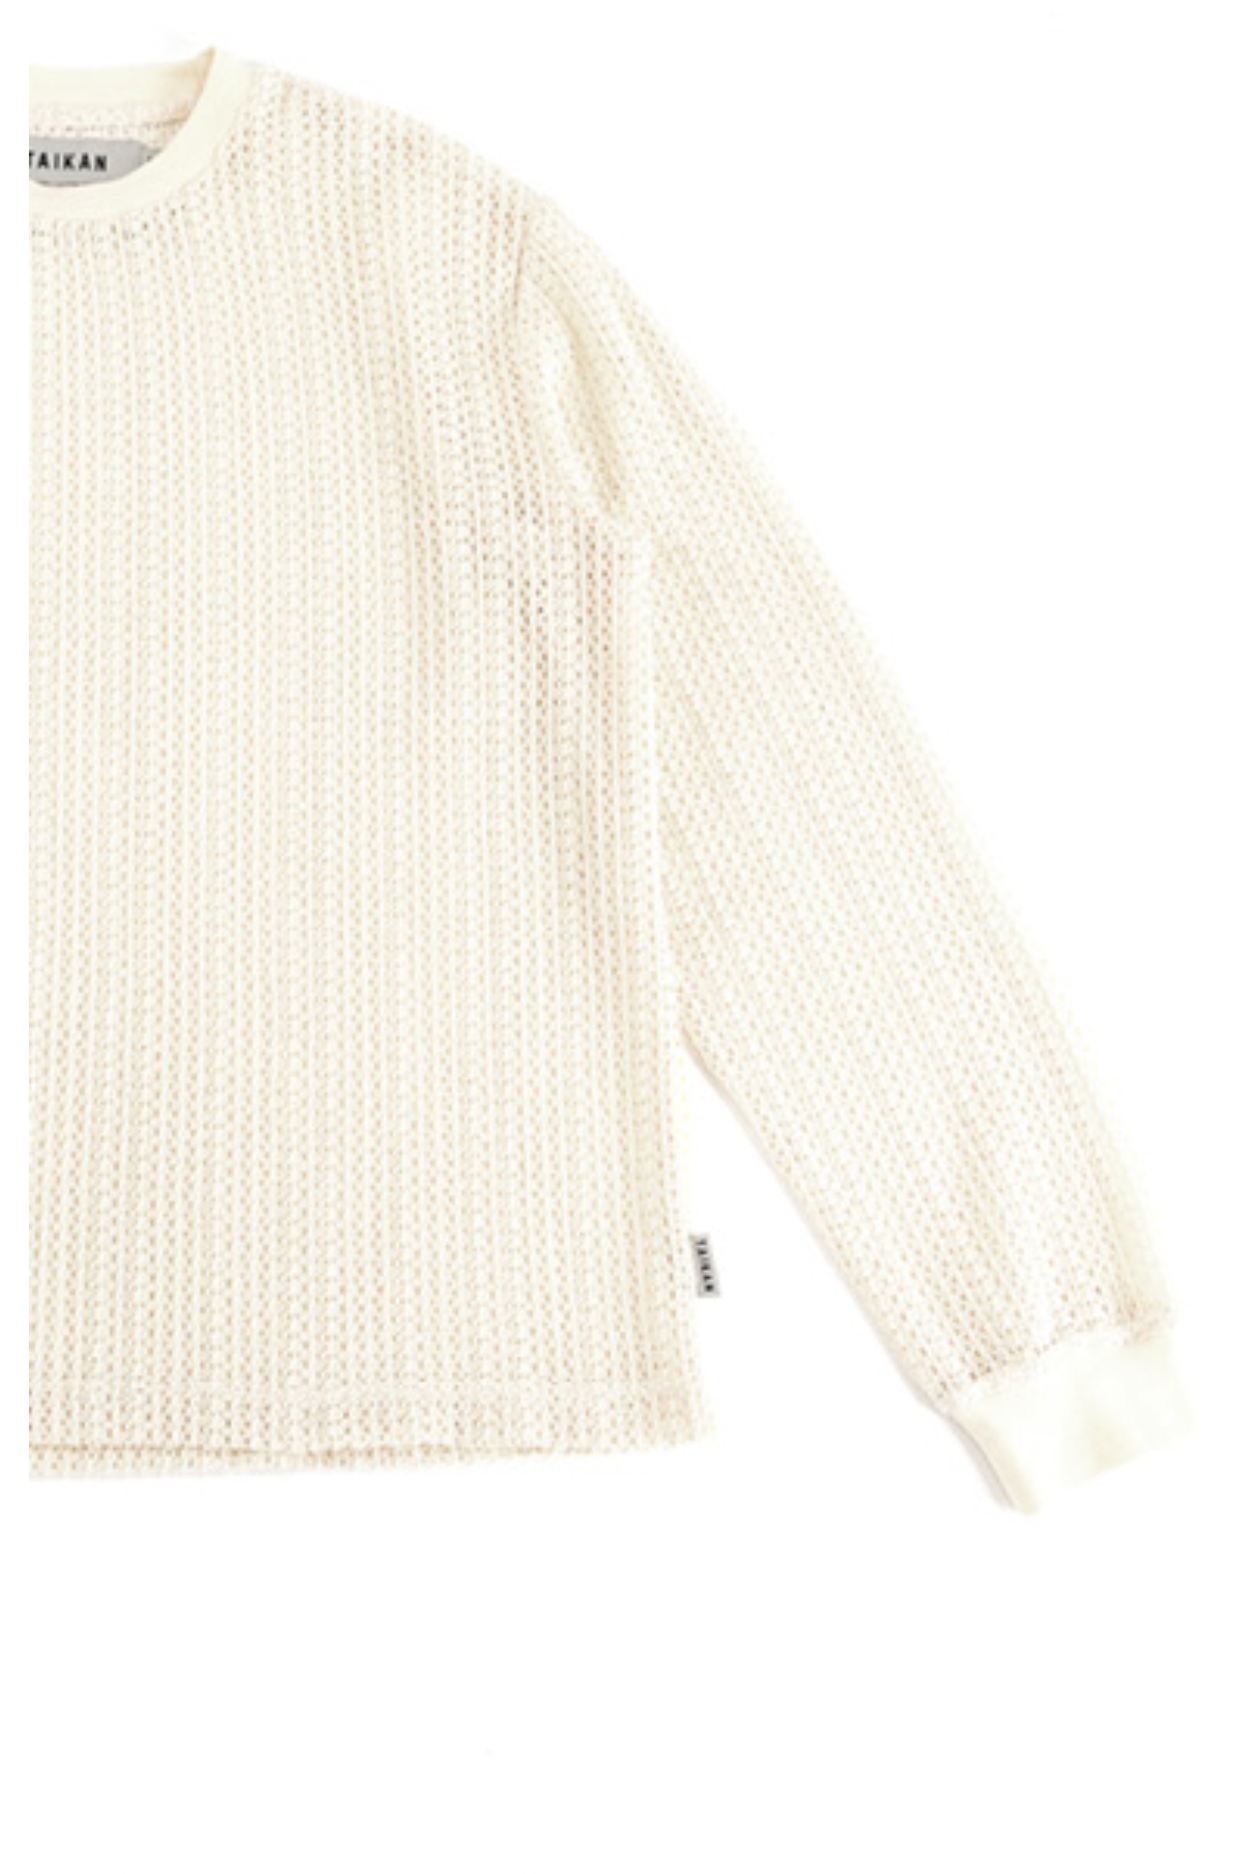 Taikan Loose Knit Crocheted Sweater - Cream